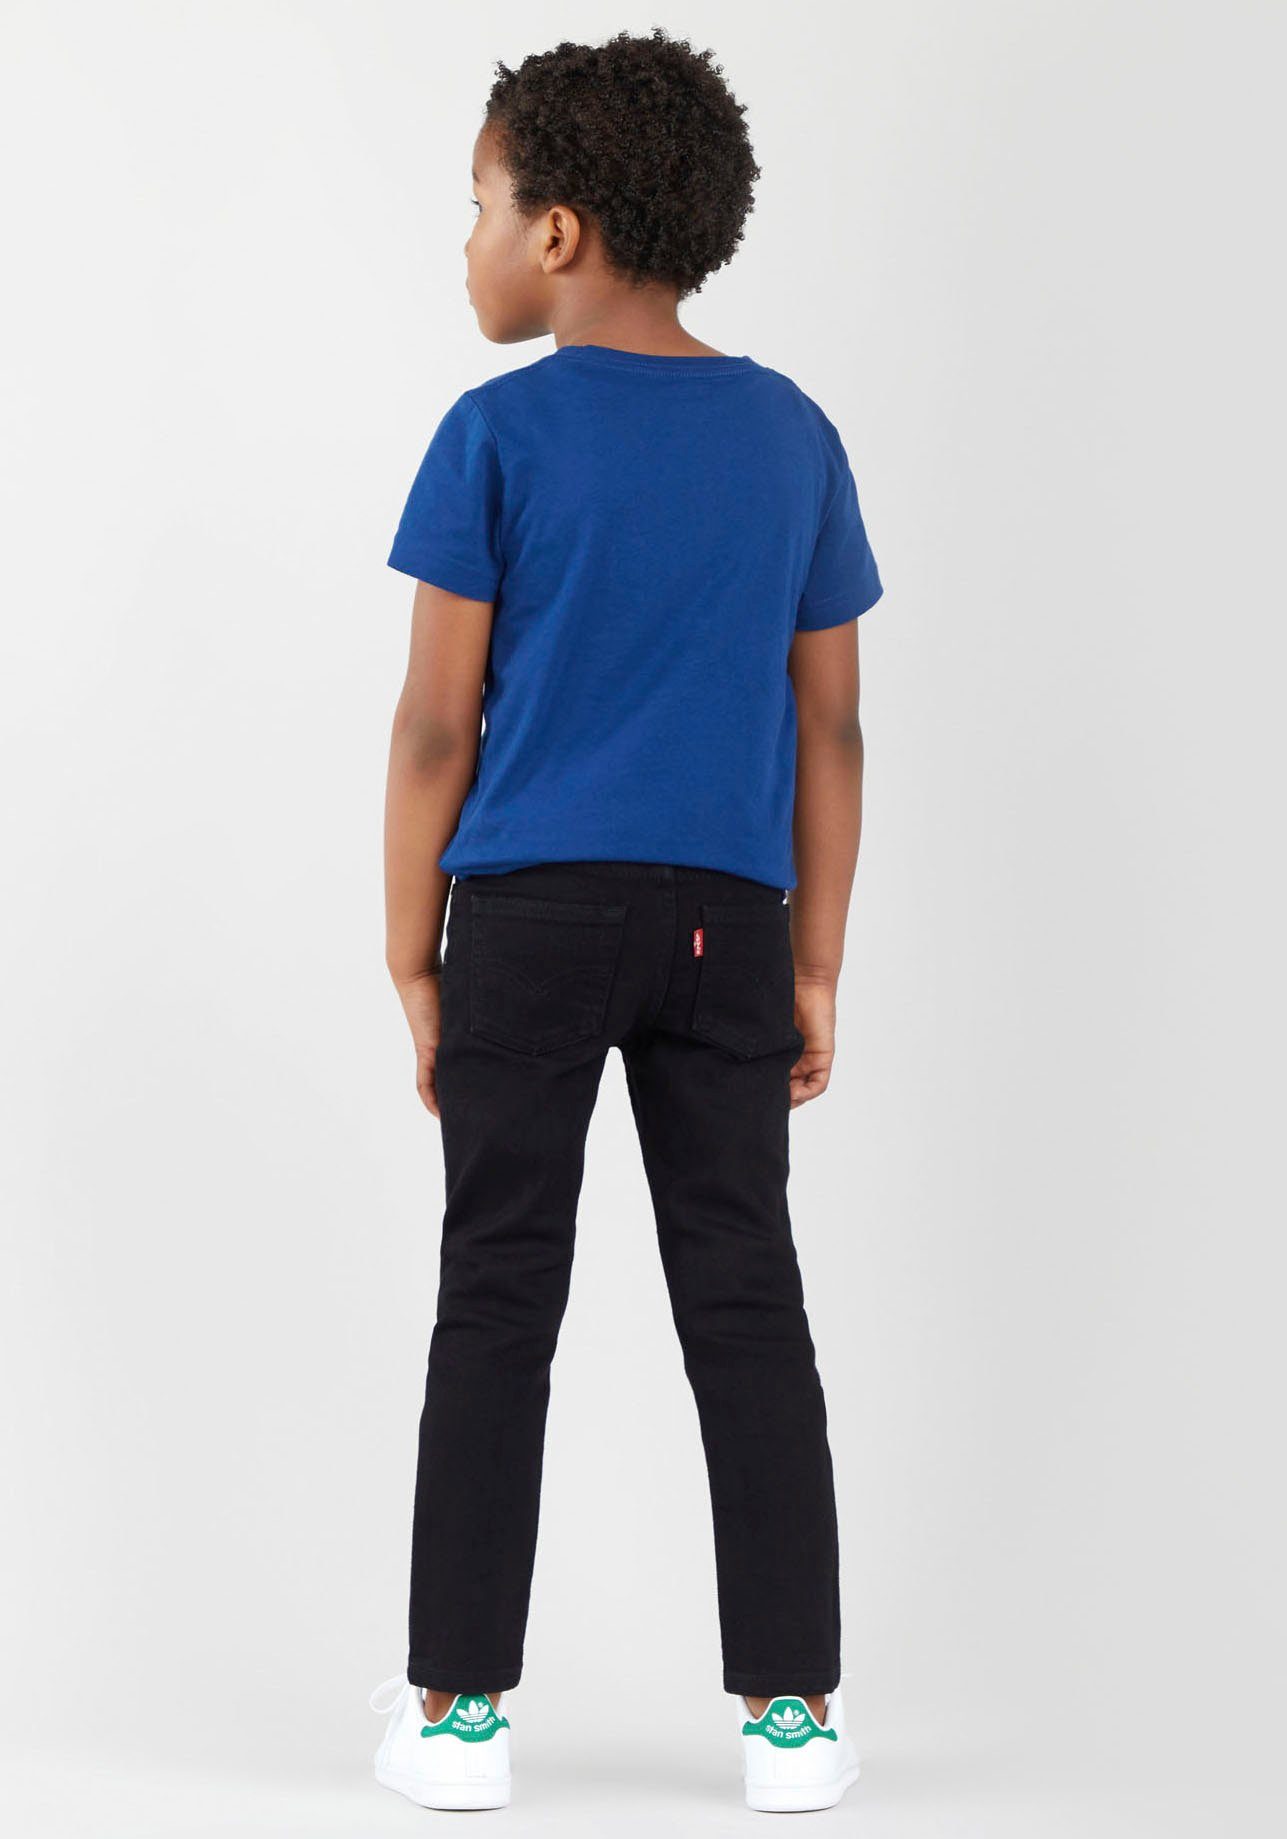 Levi's® Kids Skinny-fit-Jeans 510 BOYS FIT JEANS black for SKINNY